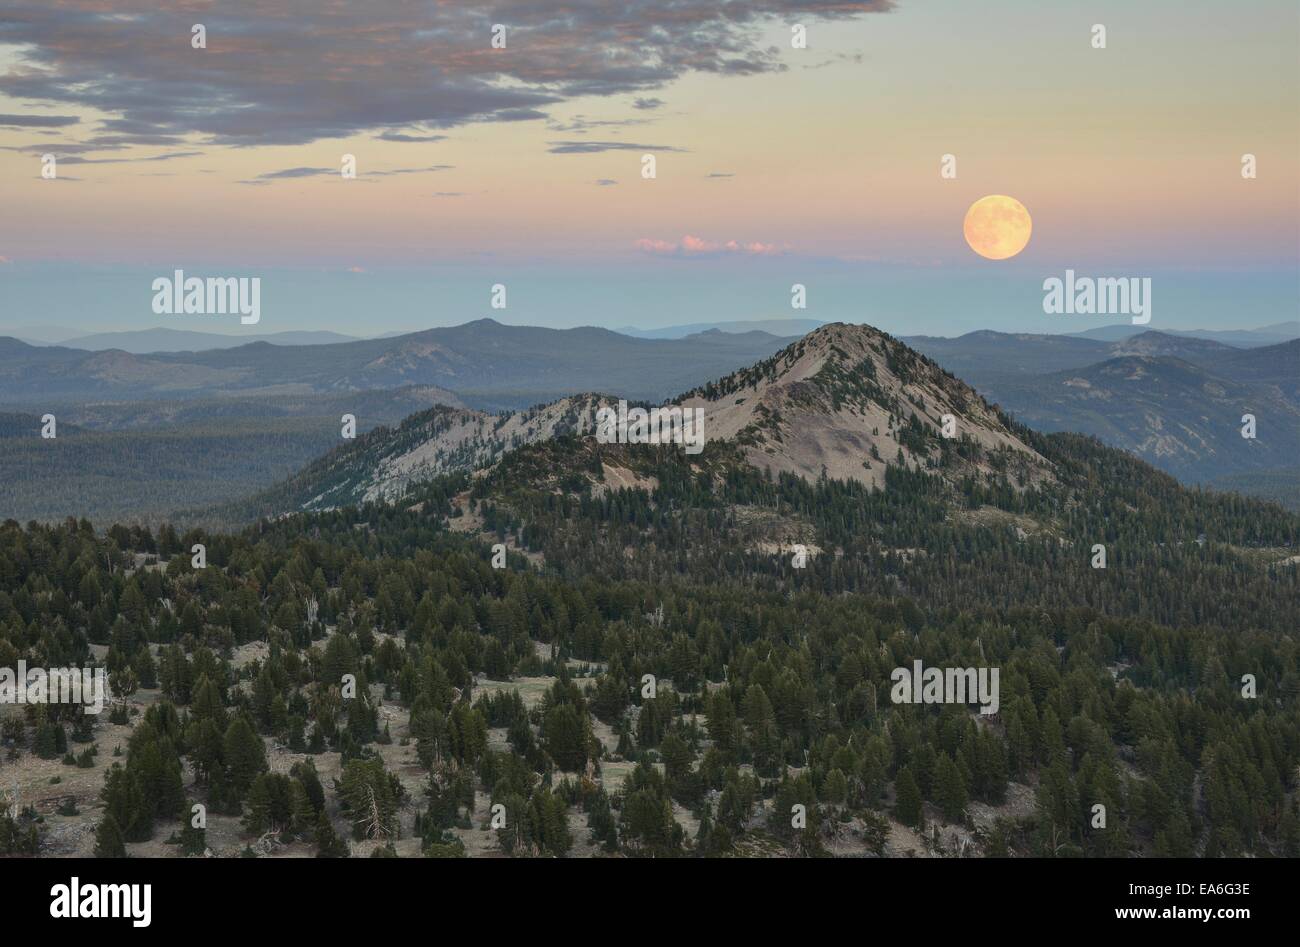 USA, California, Lassen Volcanic National Park, Rising of Moon Over Reading Peak Stock Photo